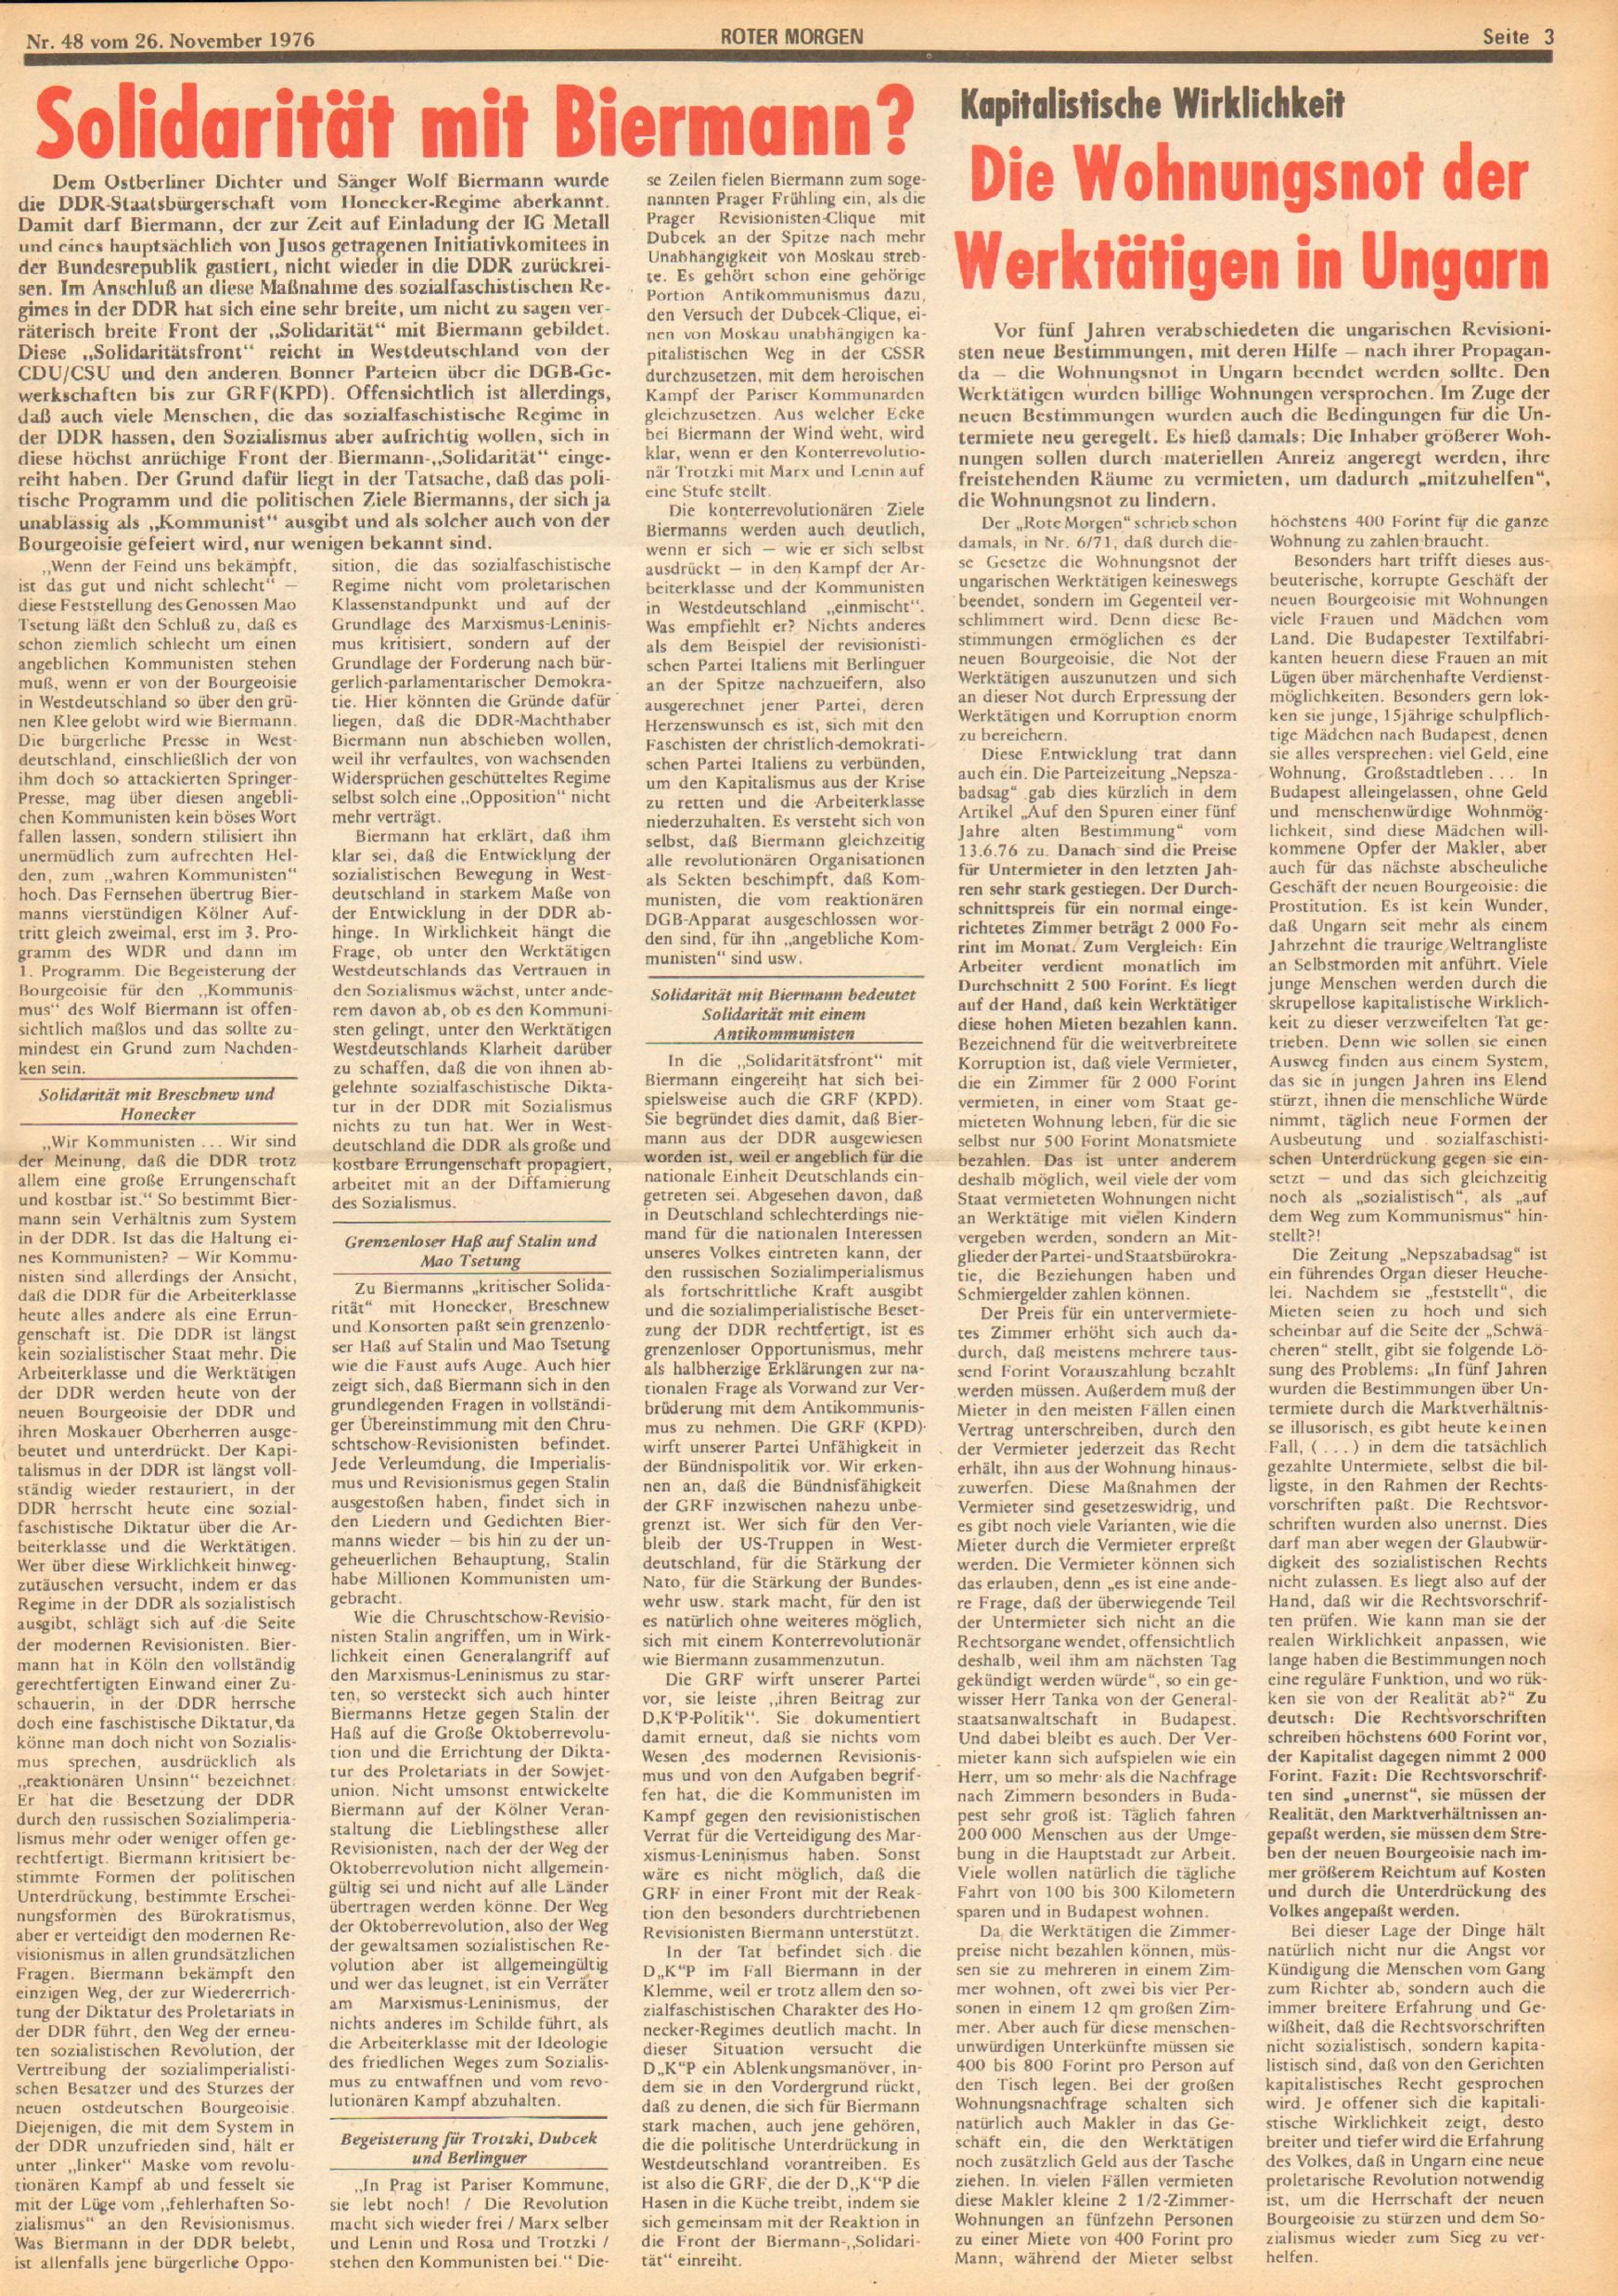 Roter Morgen, 10. Jg., 26. November 1976, Nr. 48, Seite 3